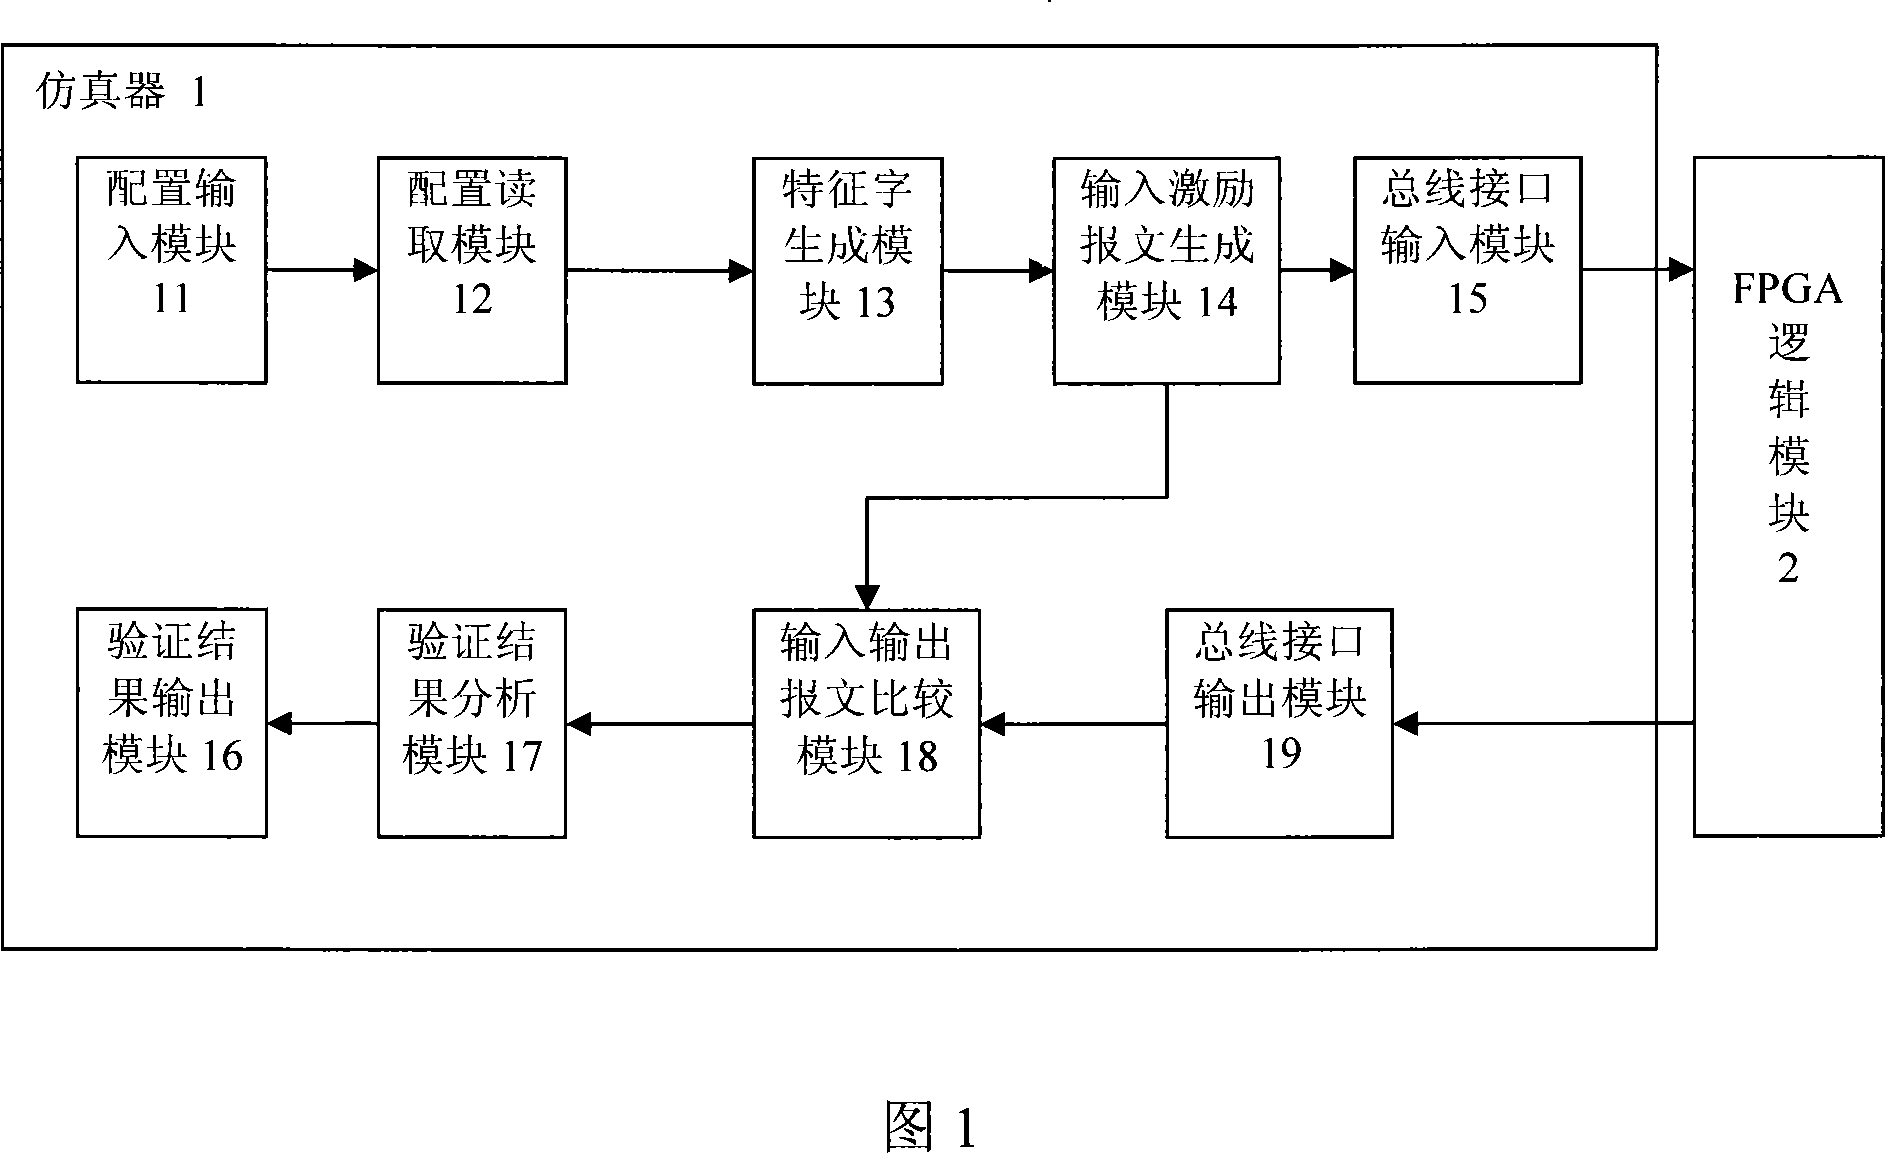 FPGA emulation device and method